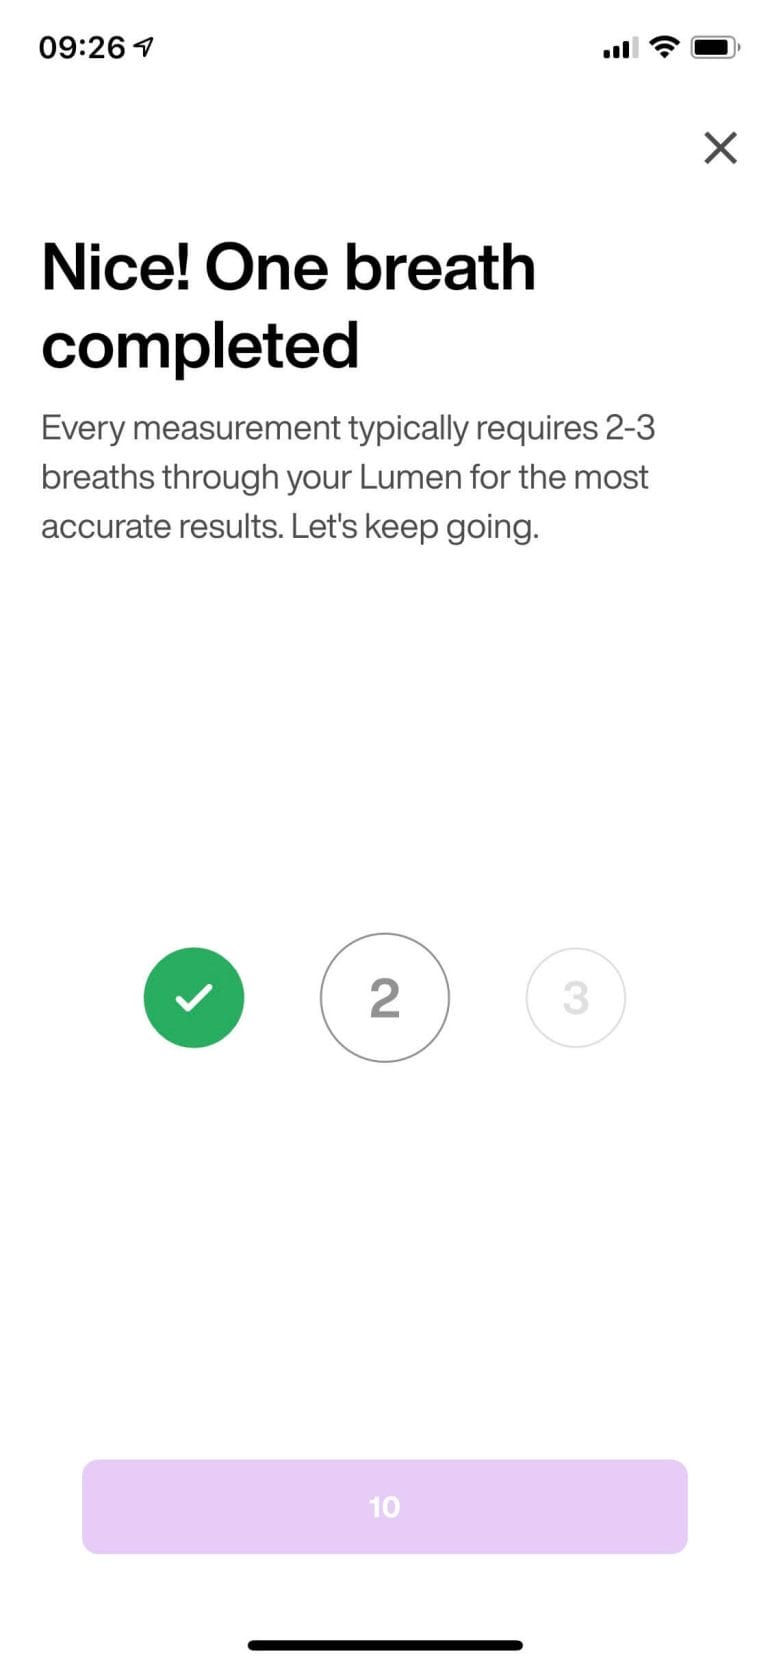 Lumen requires two to three breaths